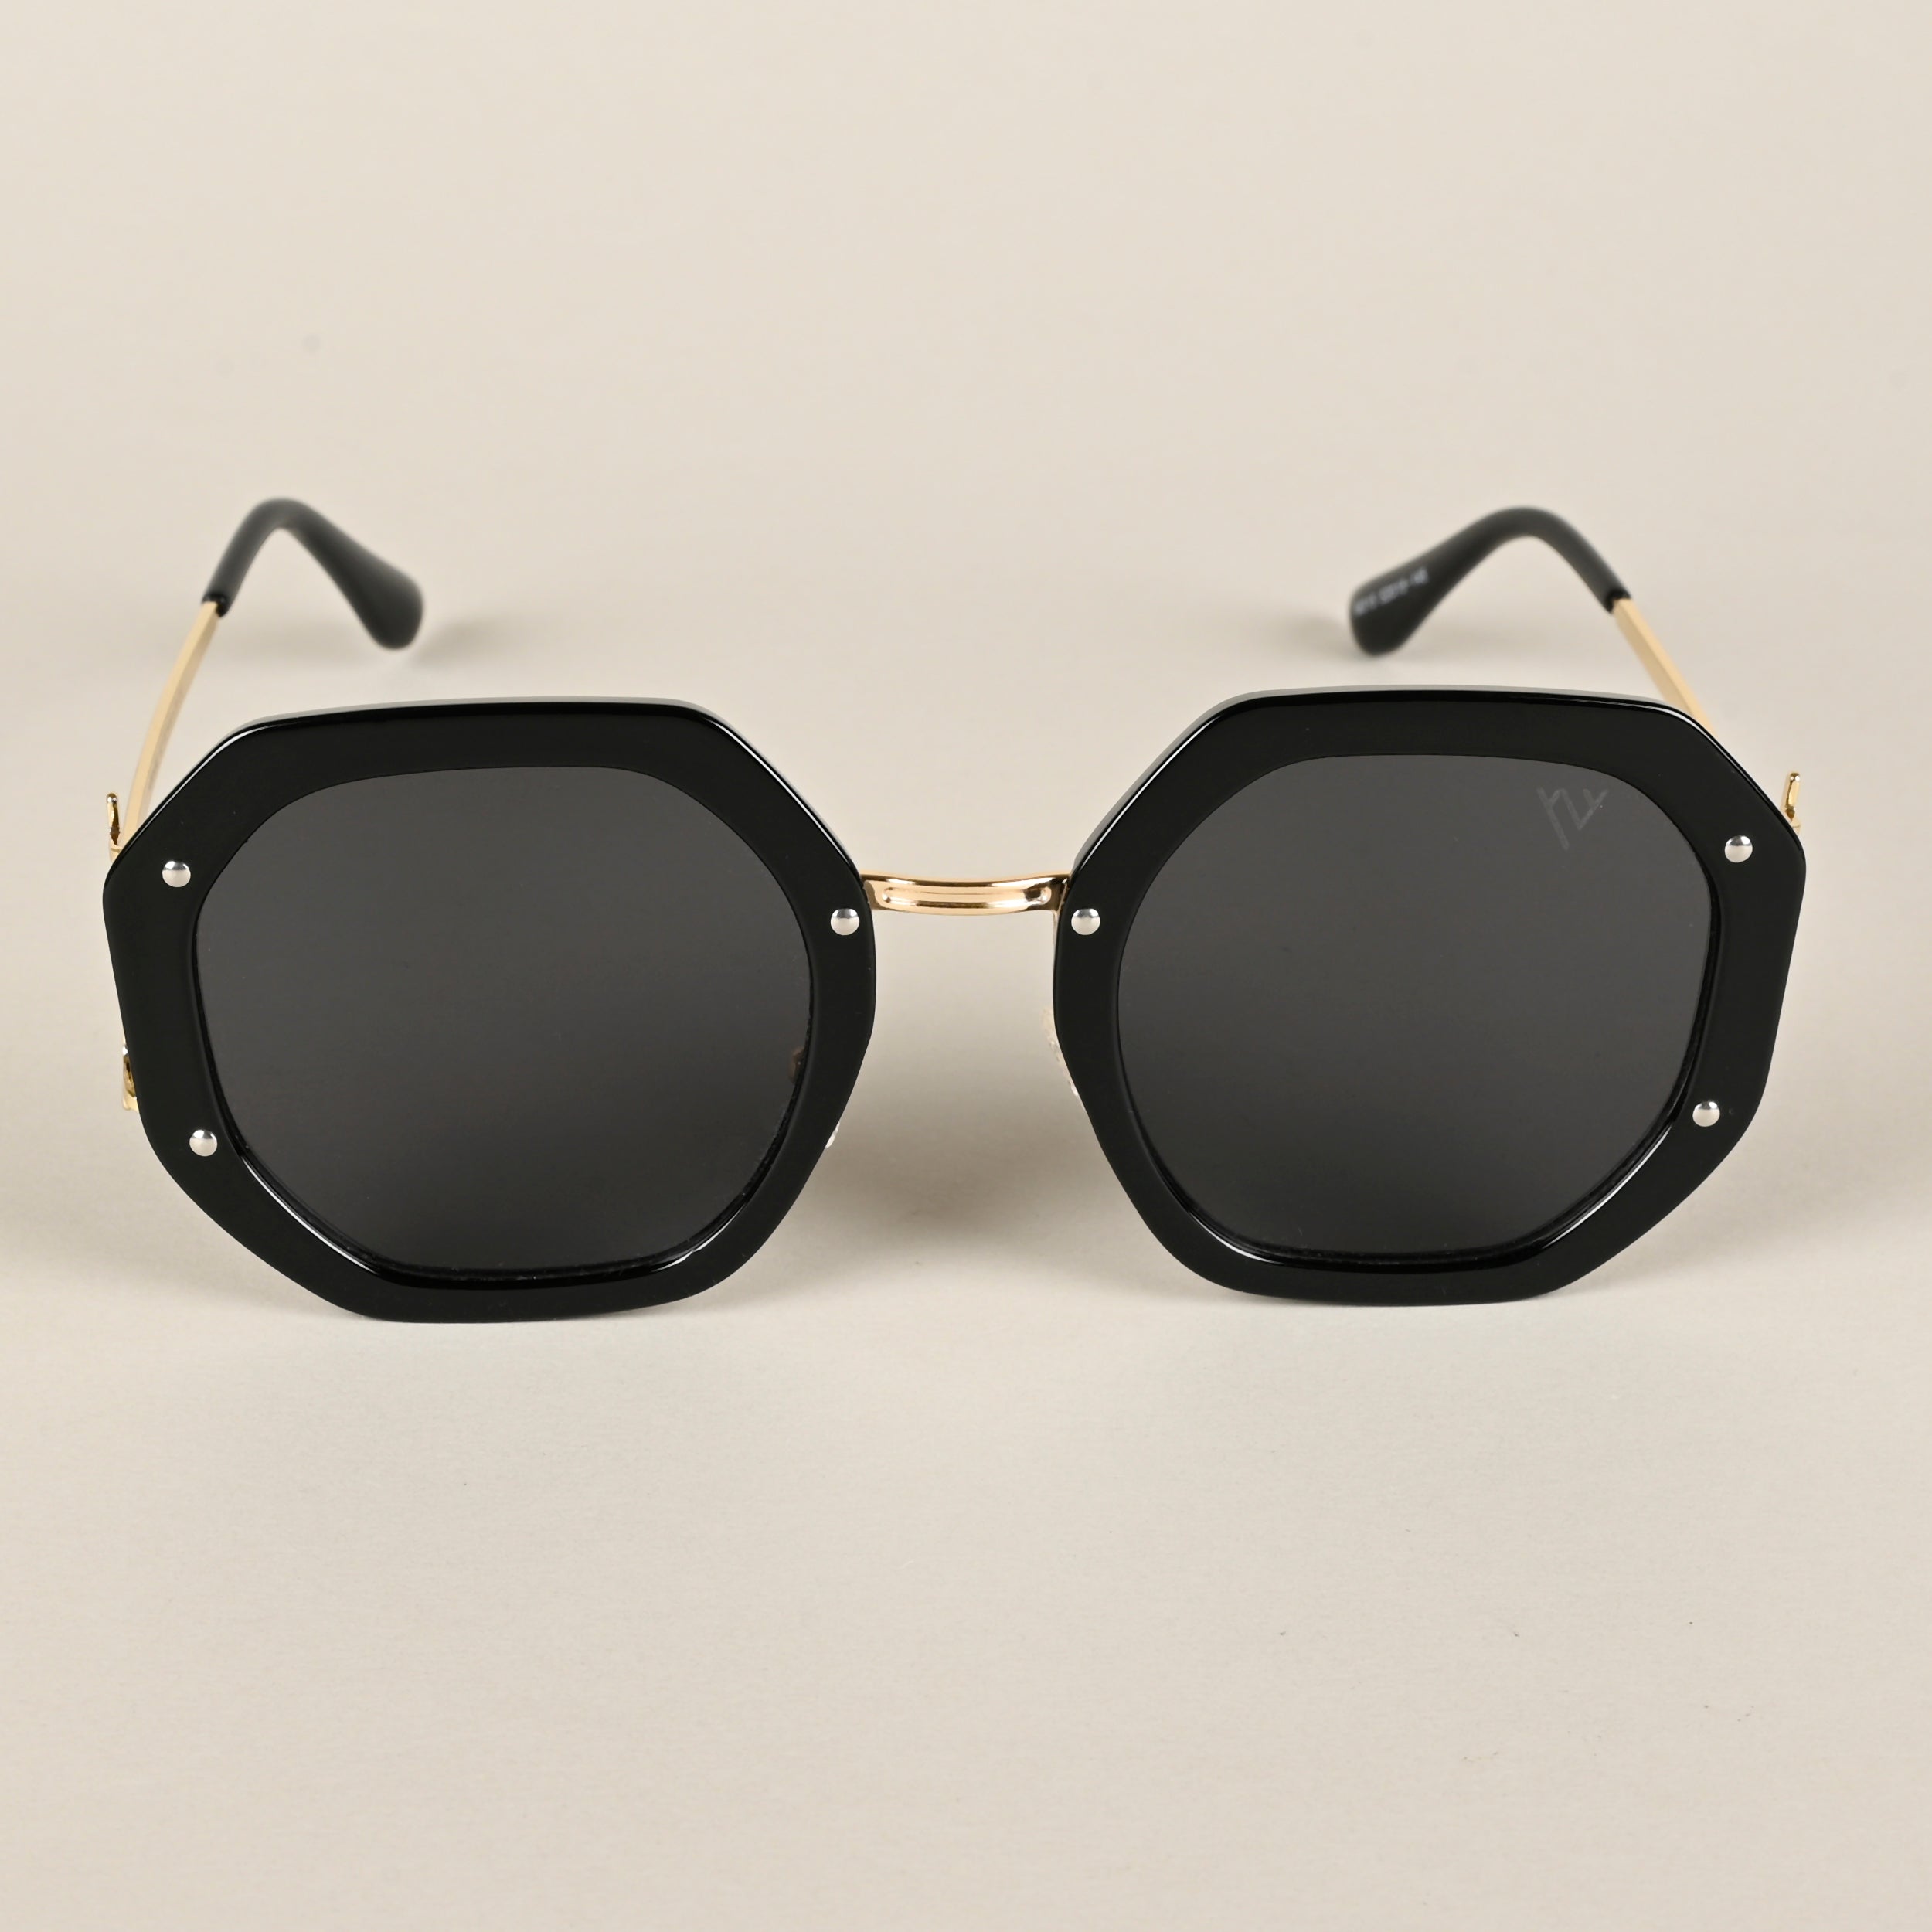 Voyage Black Geometric Sunglasses for Men & Women (315MG4198)